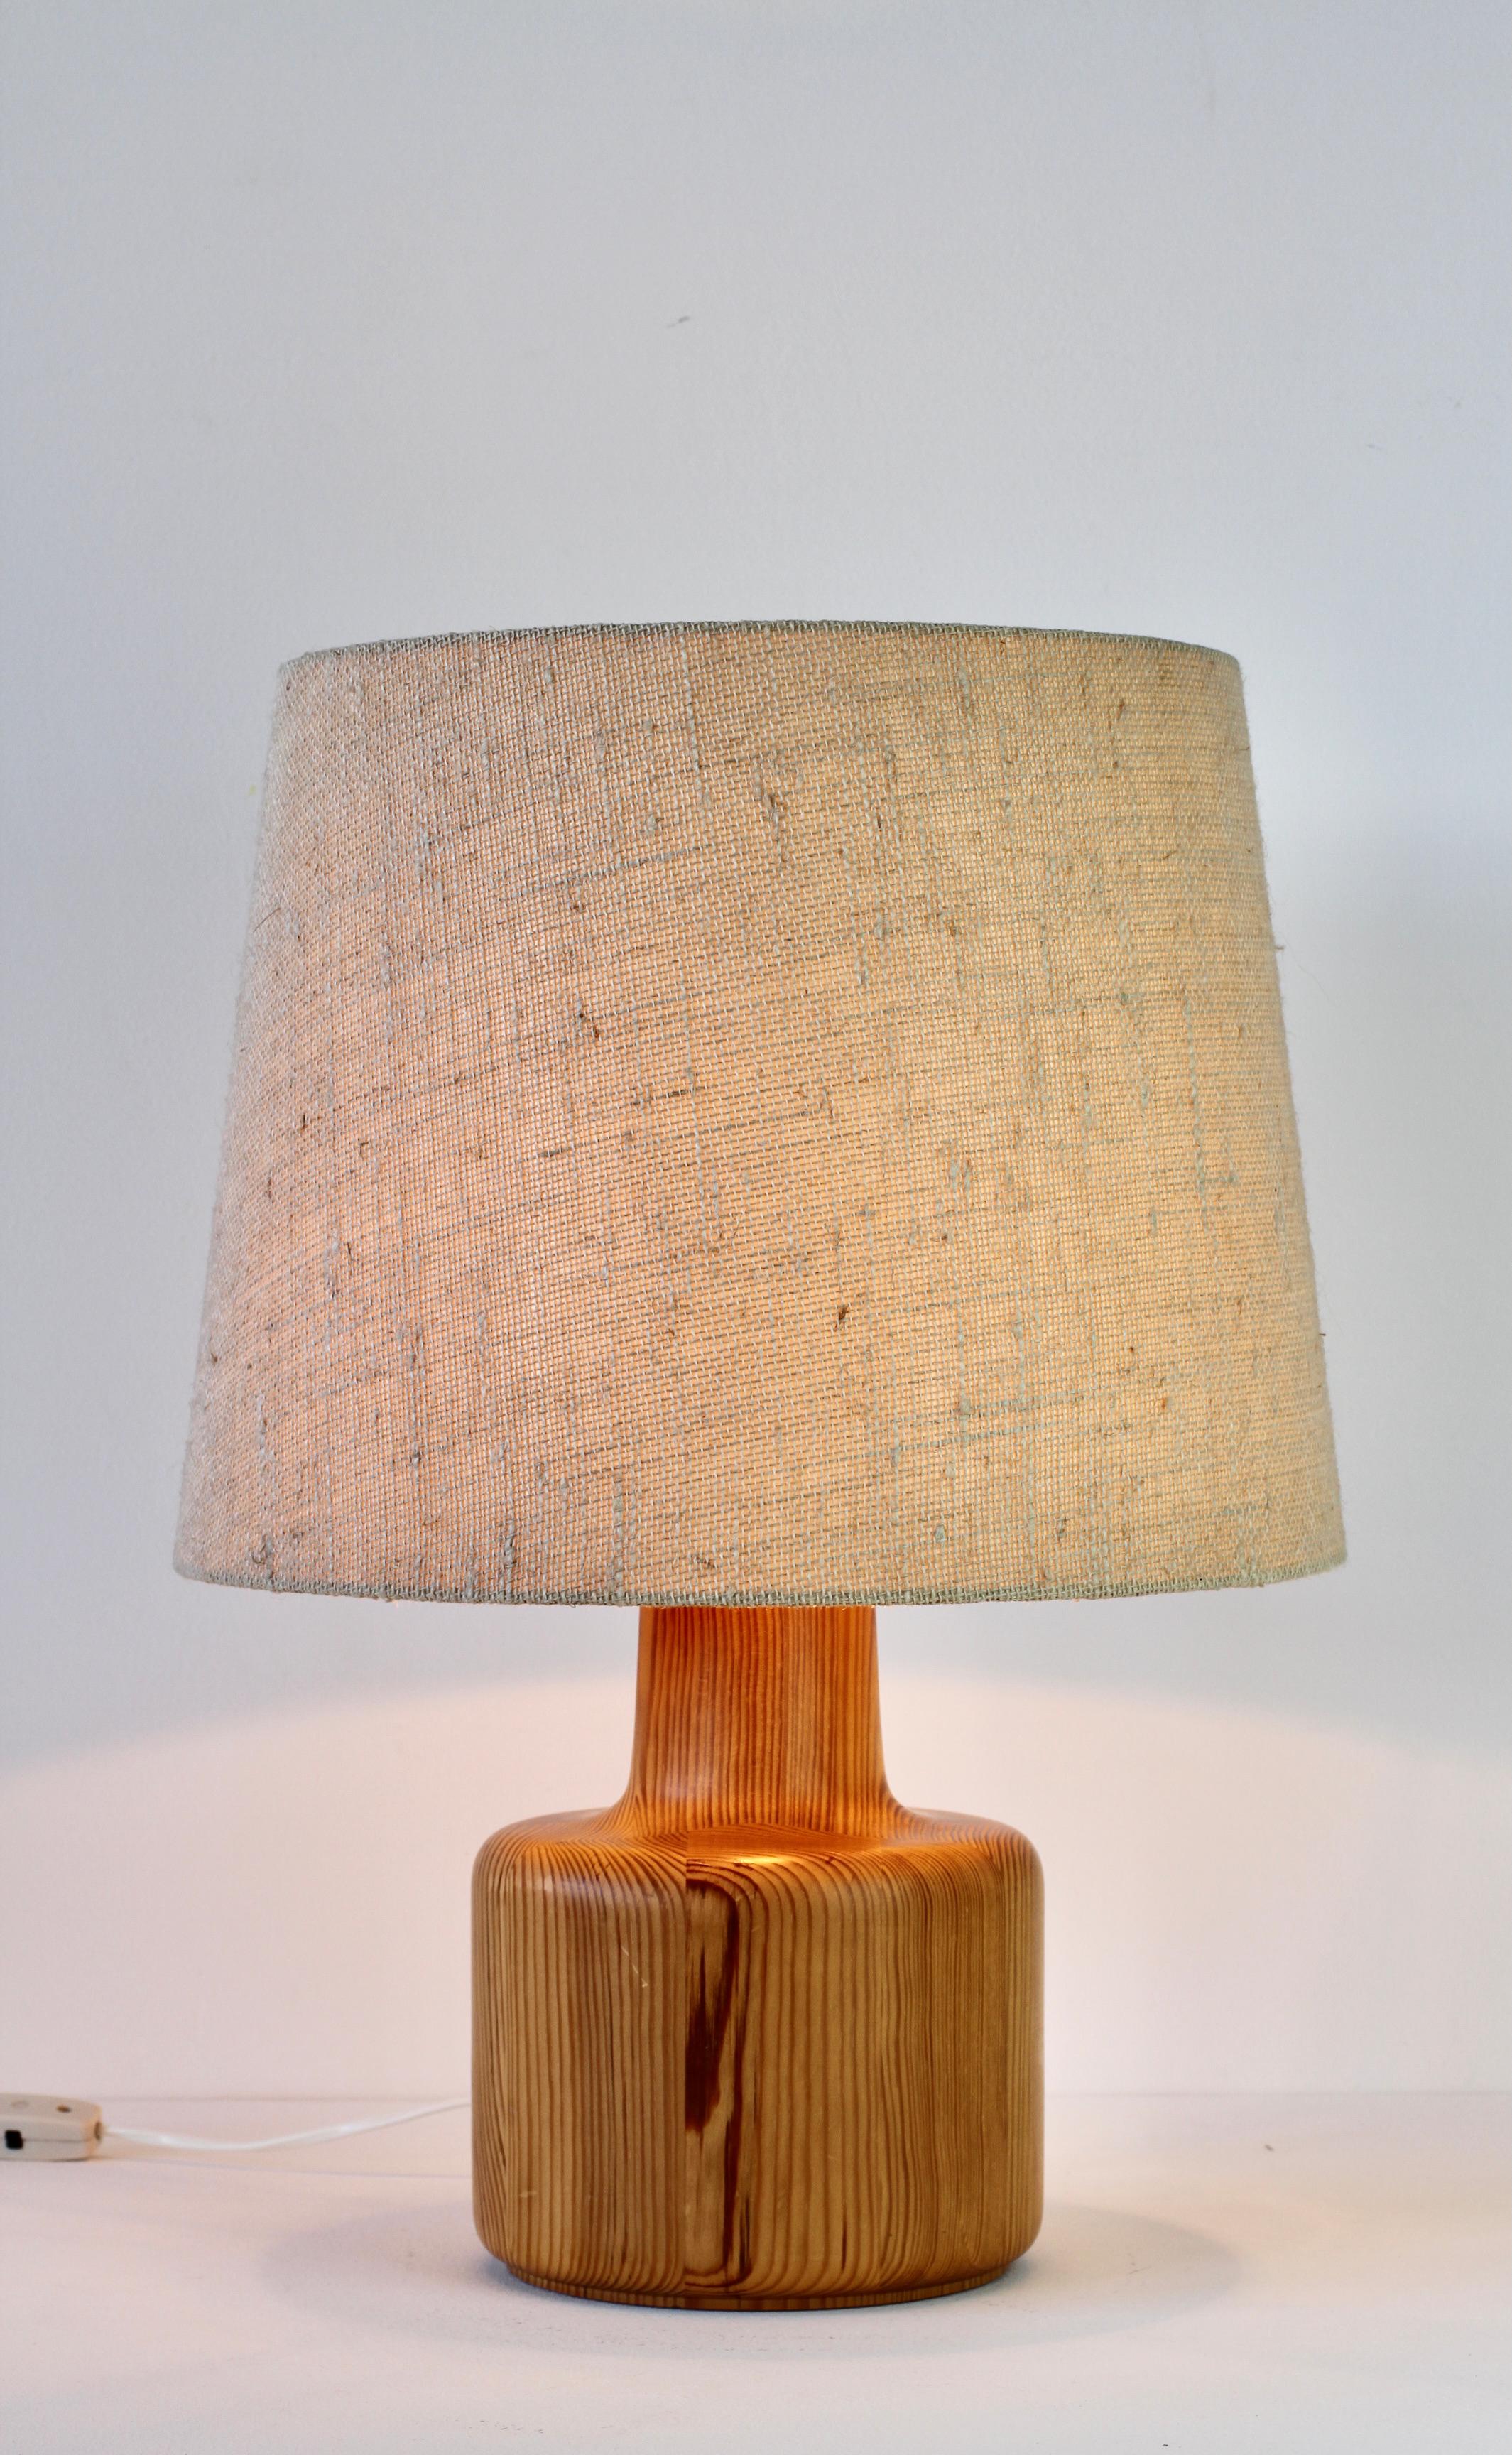 1970s Large Scandinavian Style Pine Wood Table Light Lamp Original Fabric Shade 3